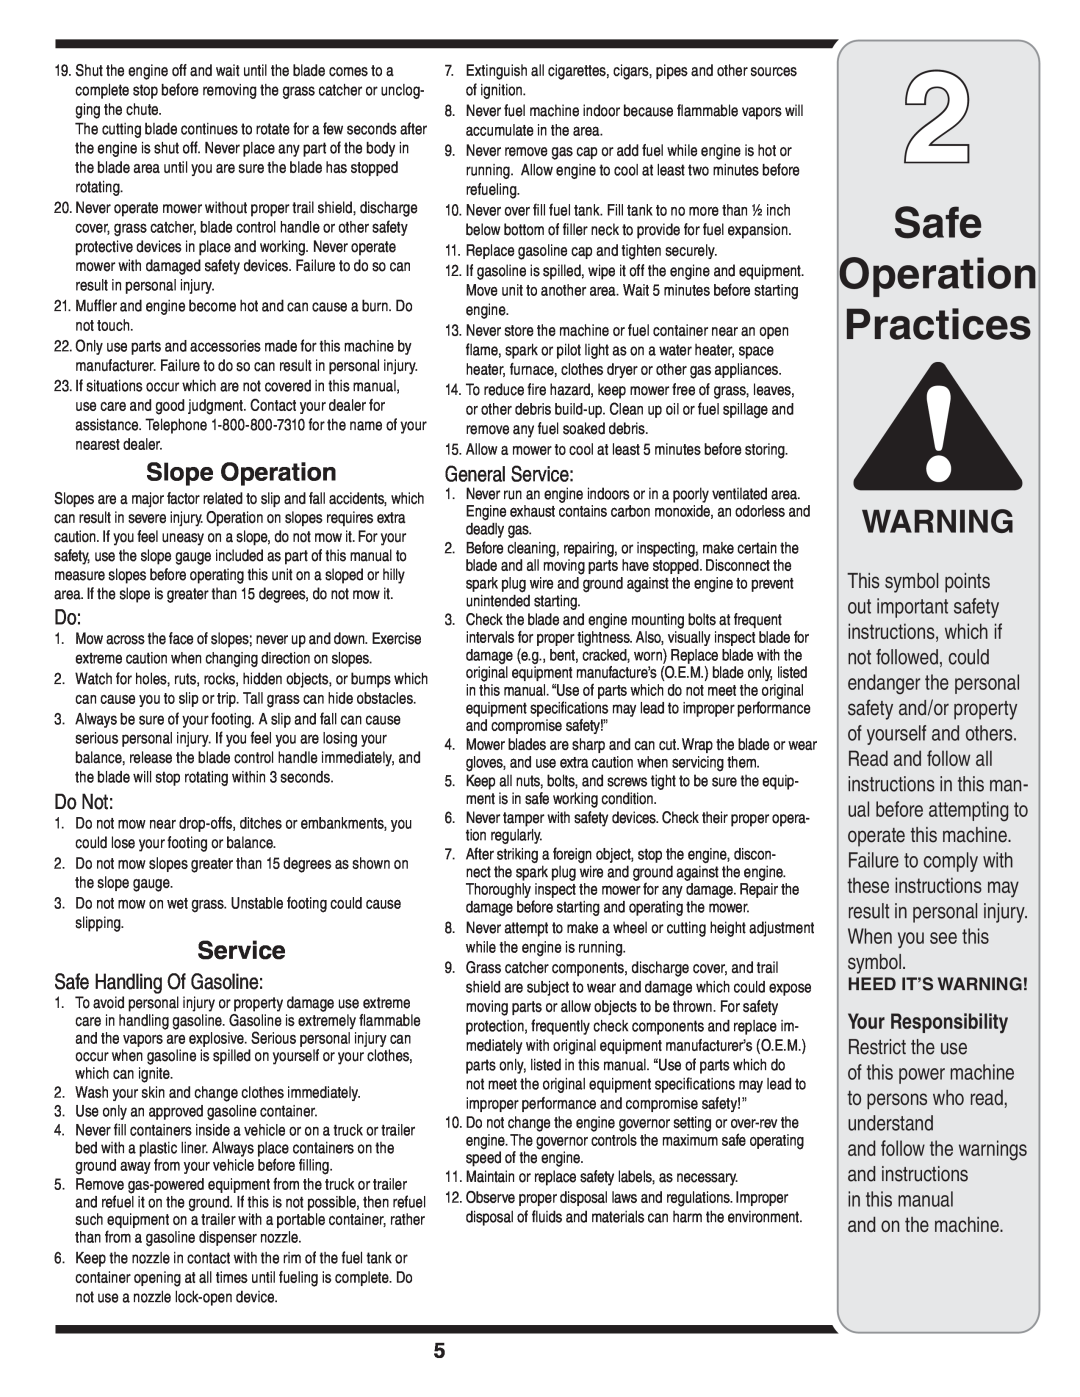 MTD 38 Safe Operation Practices, Slope Operation, Do Not, Safe Handling Of Gasoline, General Service, Restrict the use 